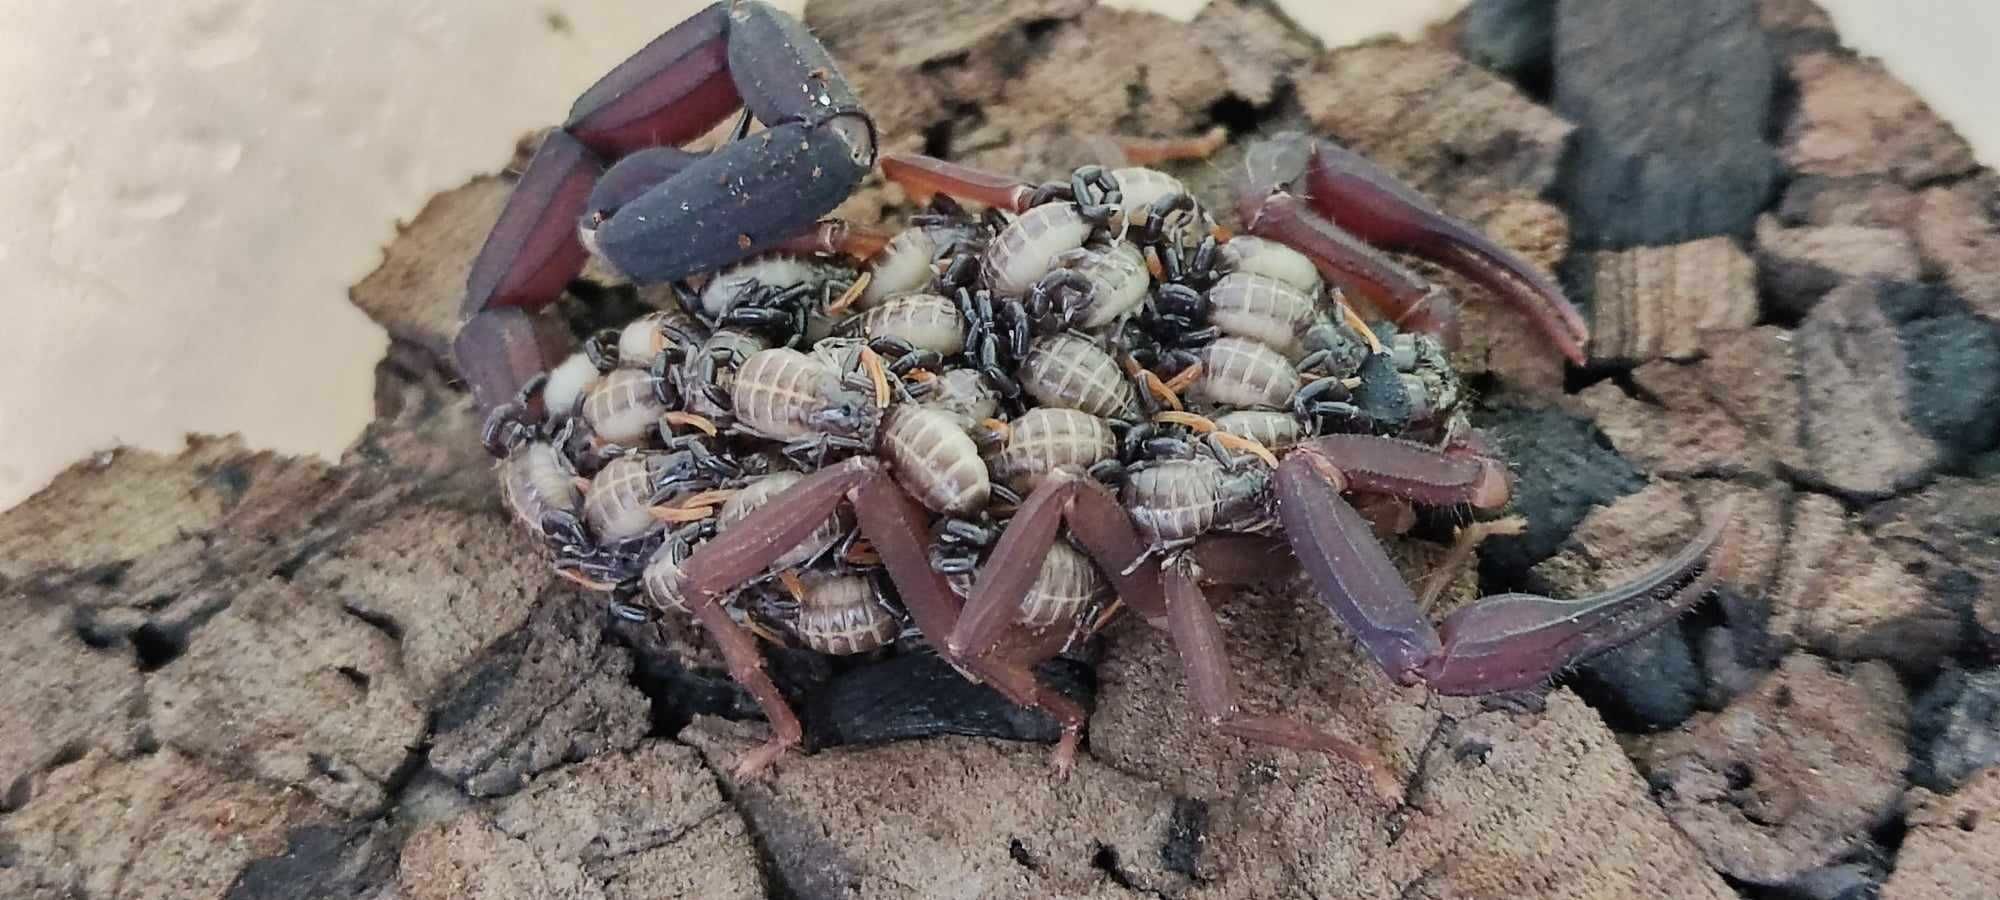 Skorpion Centruroides gracilis terrarystyka